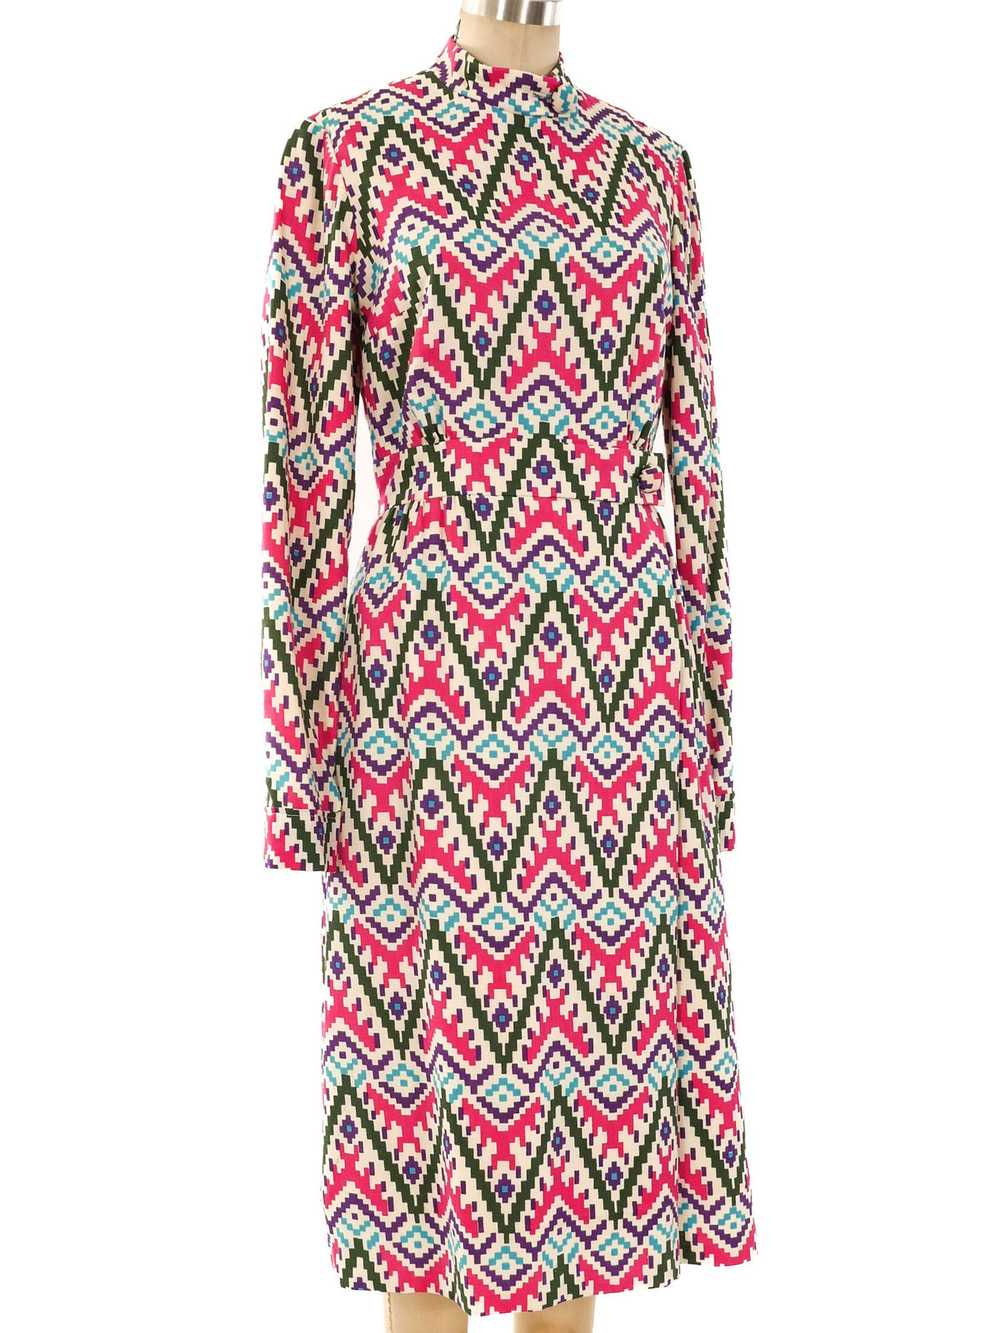 1960's Ikat Printed Wool Dress - image 2